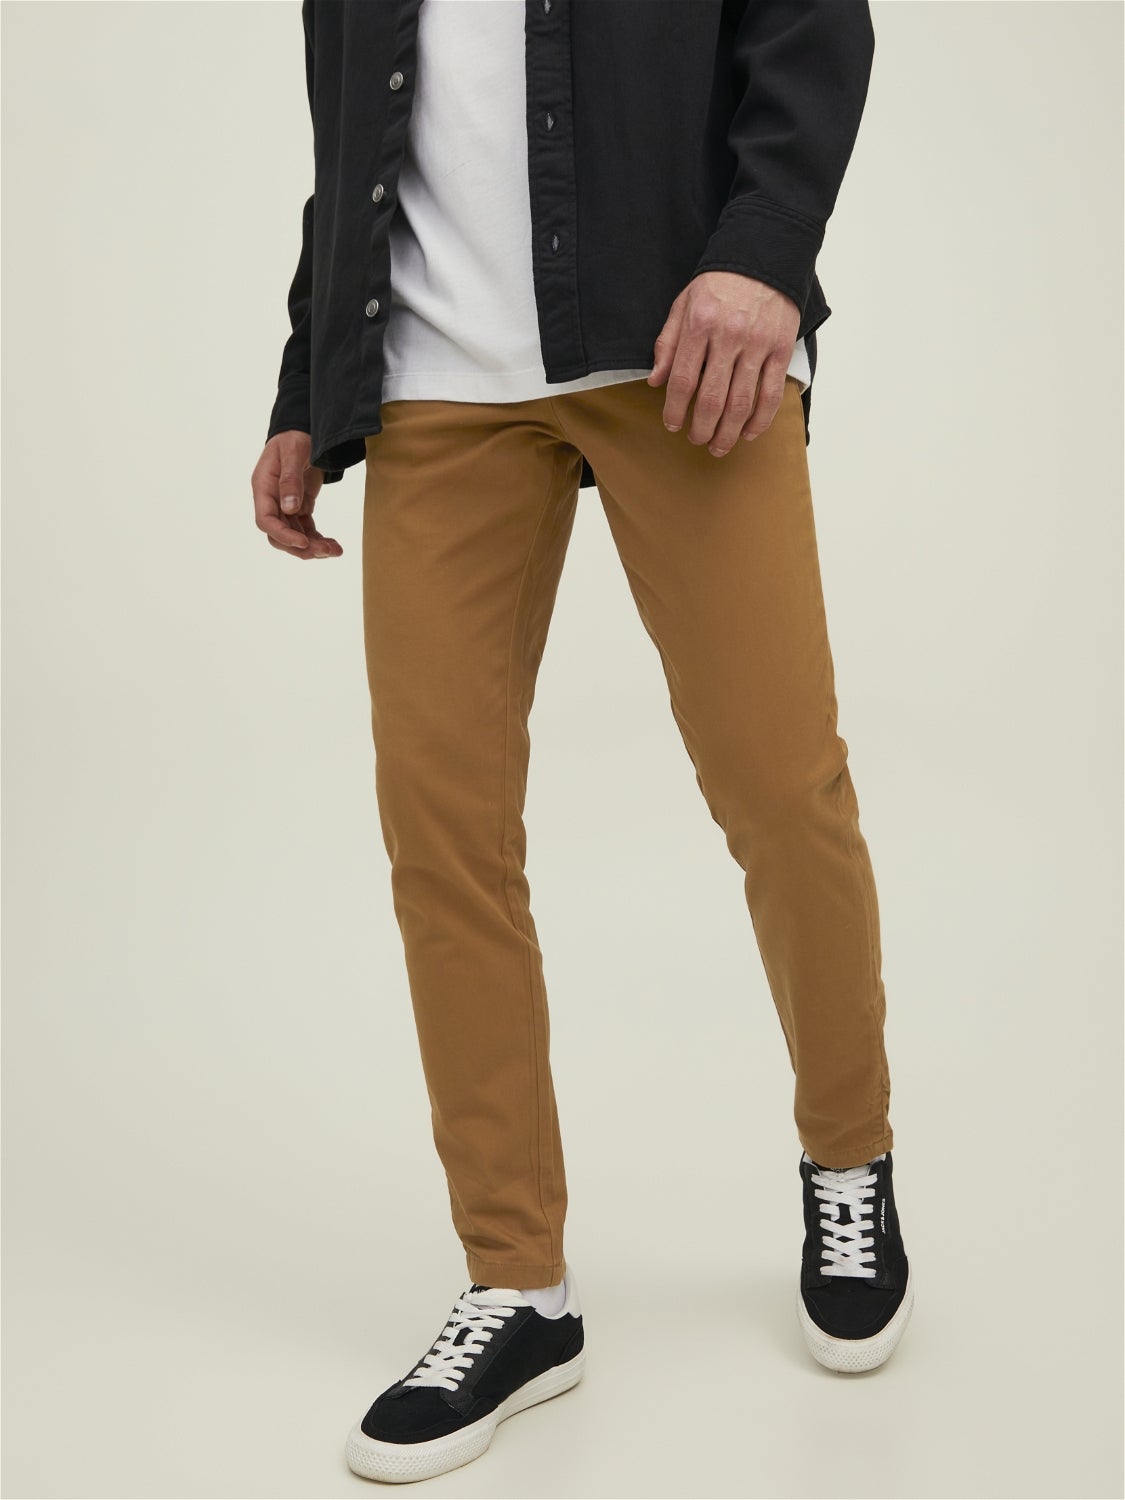 MEN FASHION Trousers Strech Black M discount 62% Jack & Jones Chino trouser 